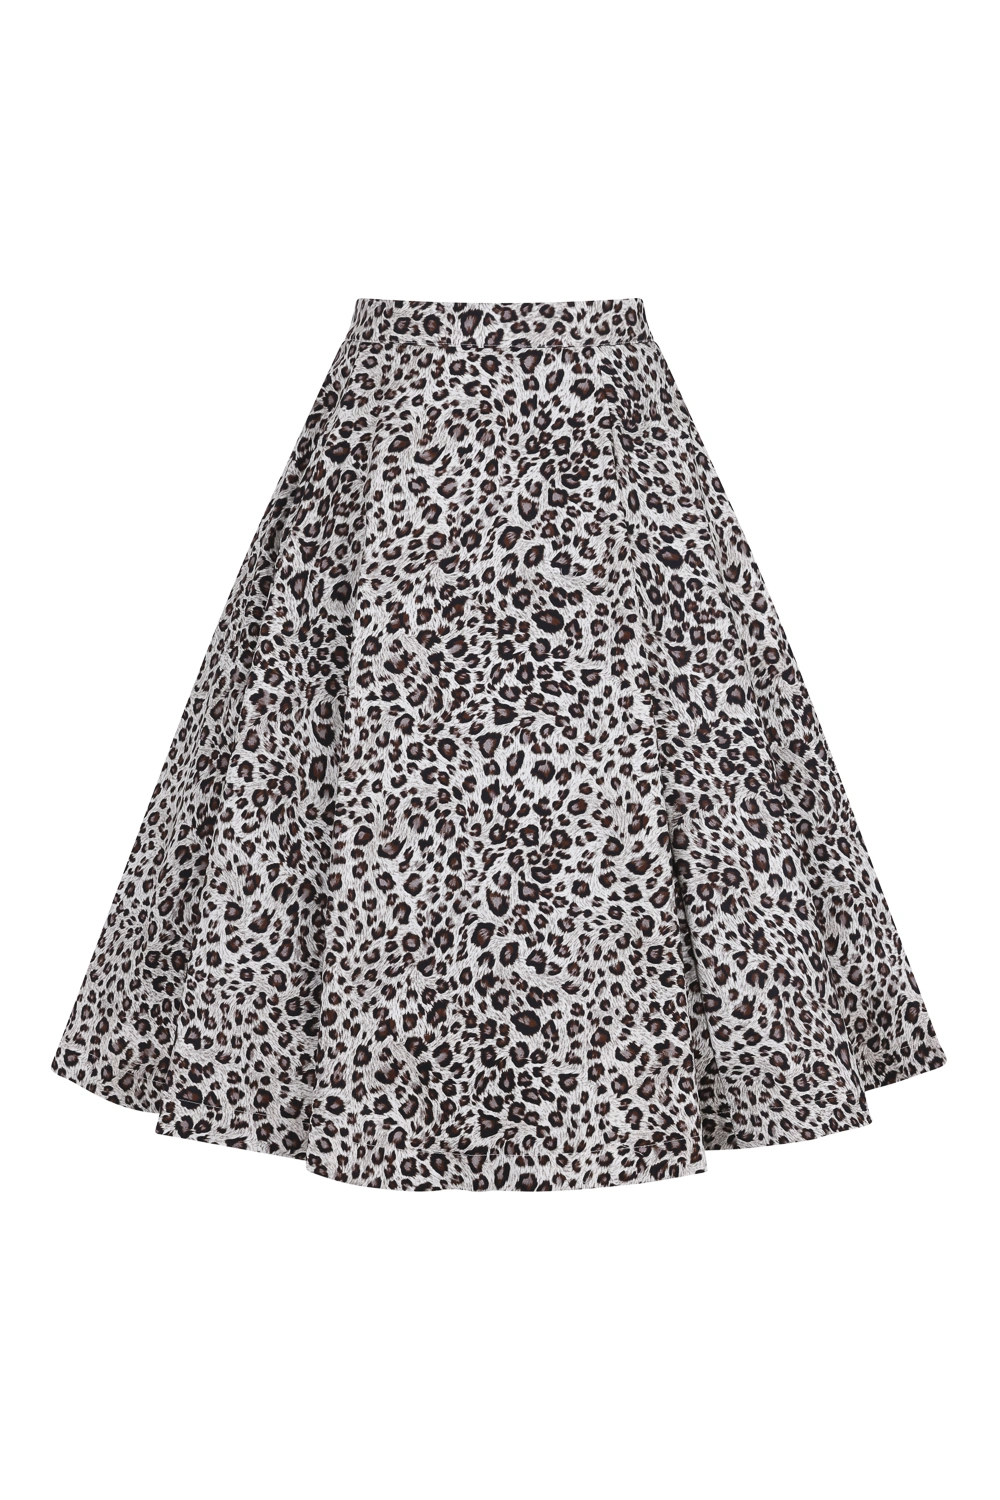 2021 Leopard Print Skirt Ladies Party Casual Long Sleeve Leopard Print Skirt